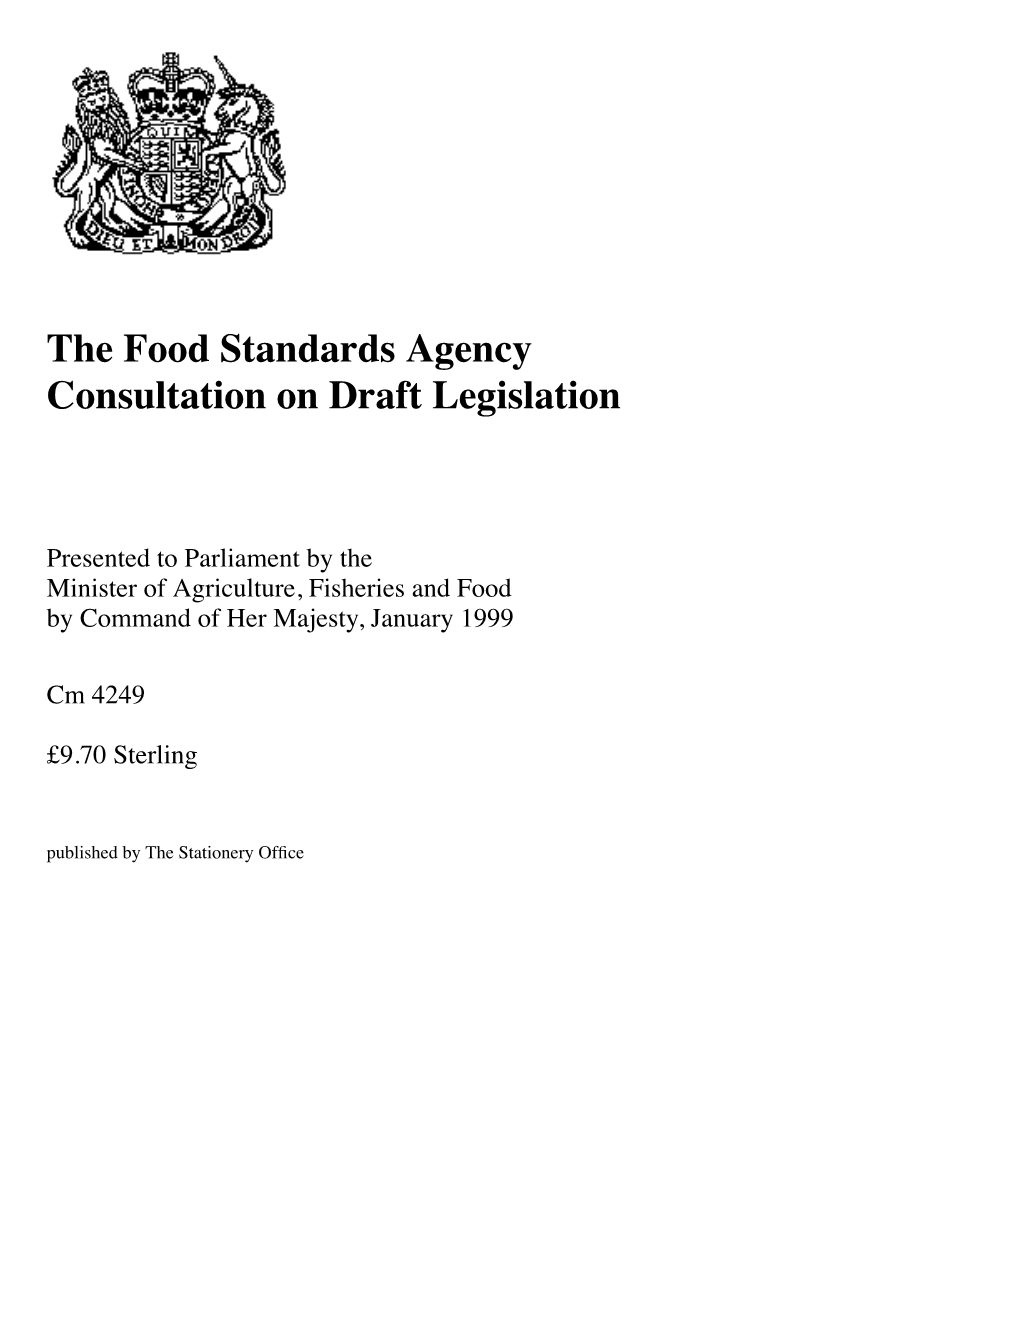 The Food Standards Agency Consultation on Draft Legislation